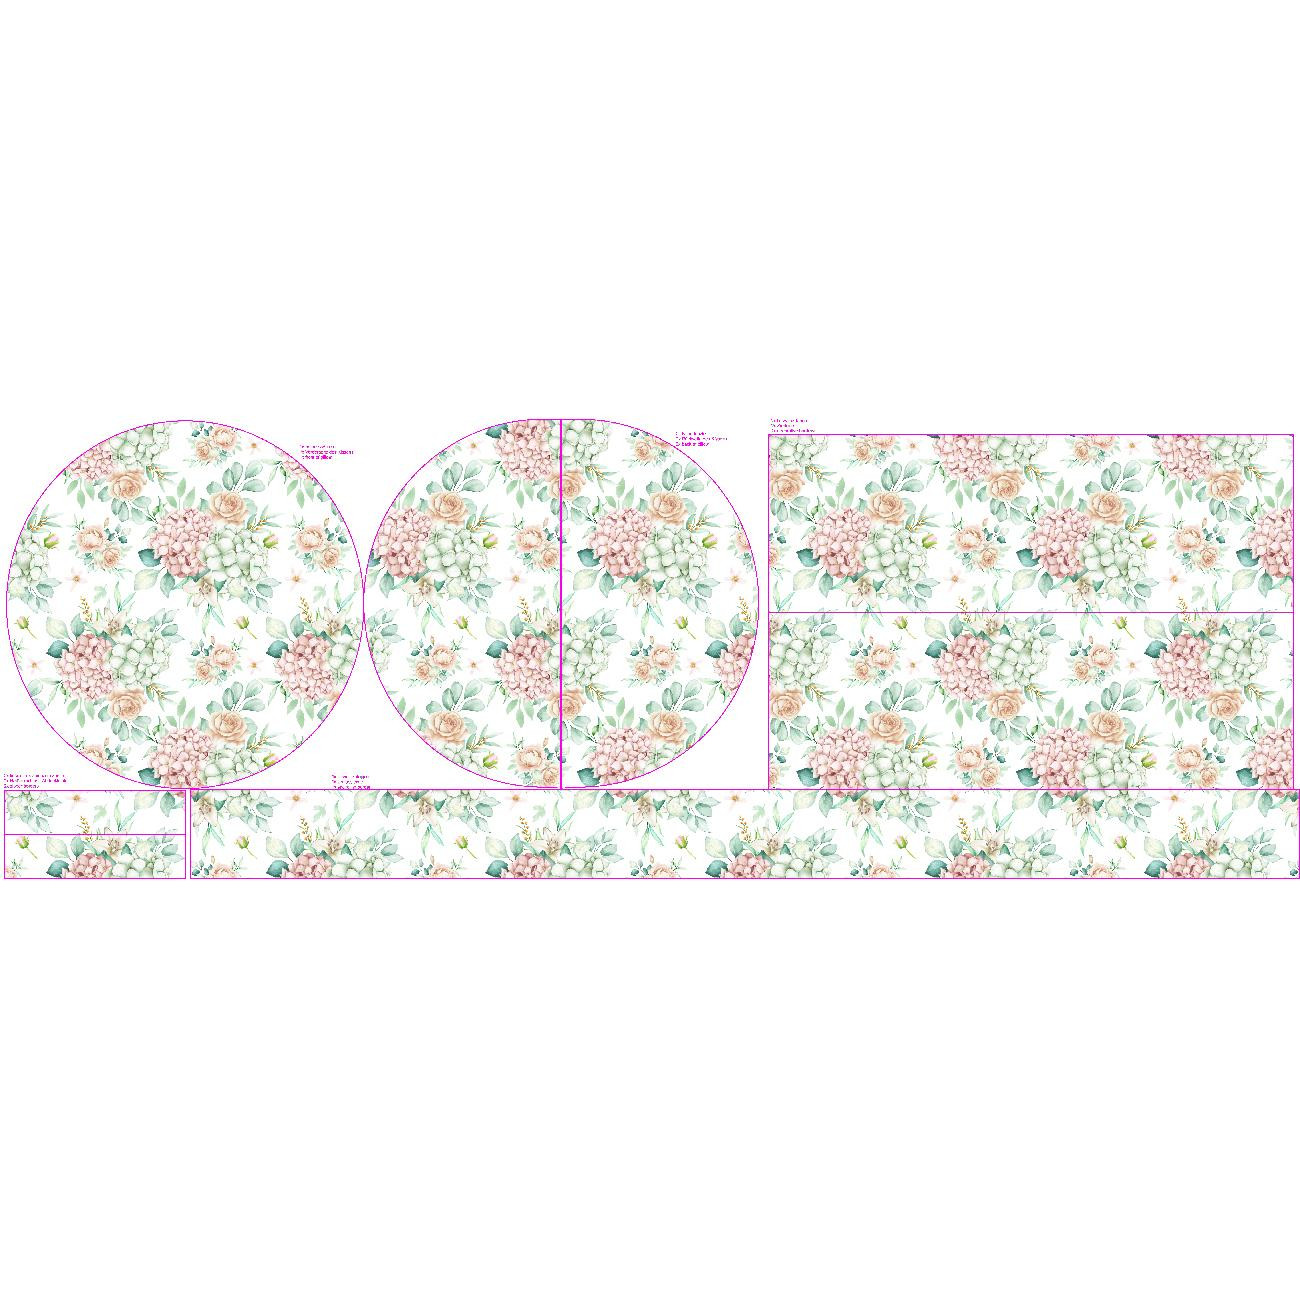 DECORATIVE CUSHION - Hydrangeas / white - sewing set